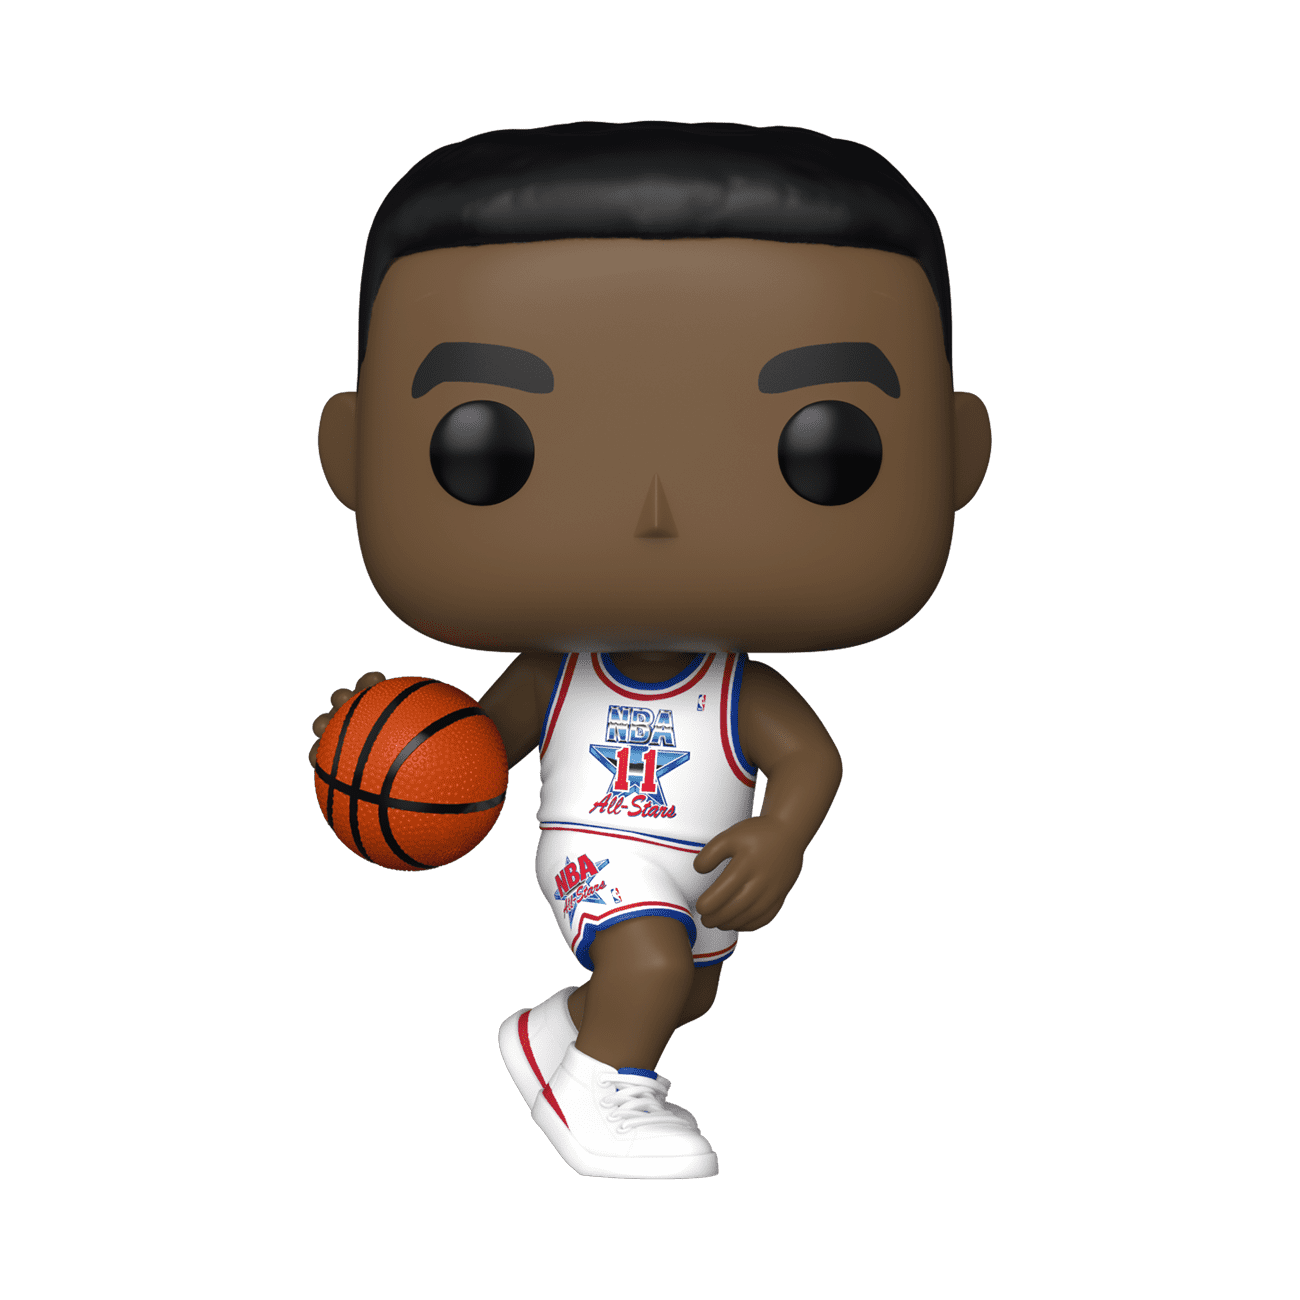 NBA Legends - POP! Isiah Thomas (1992).